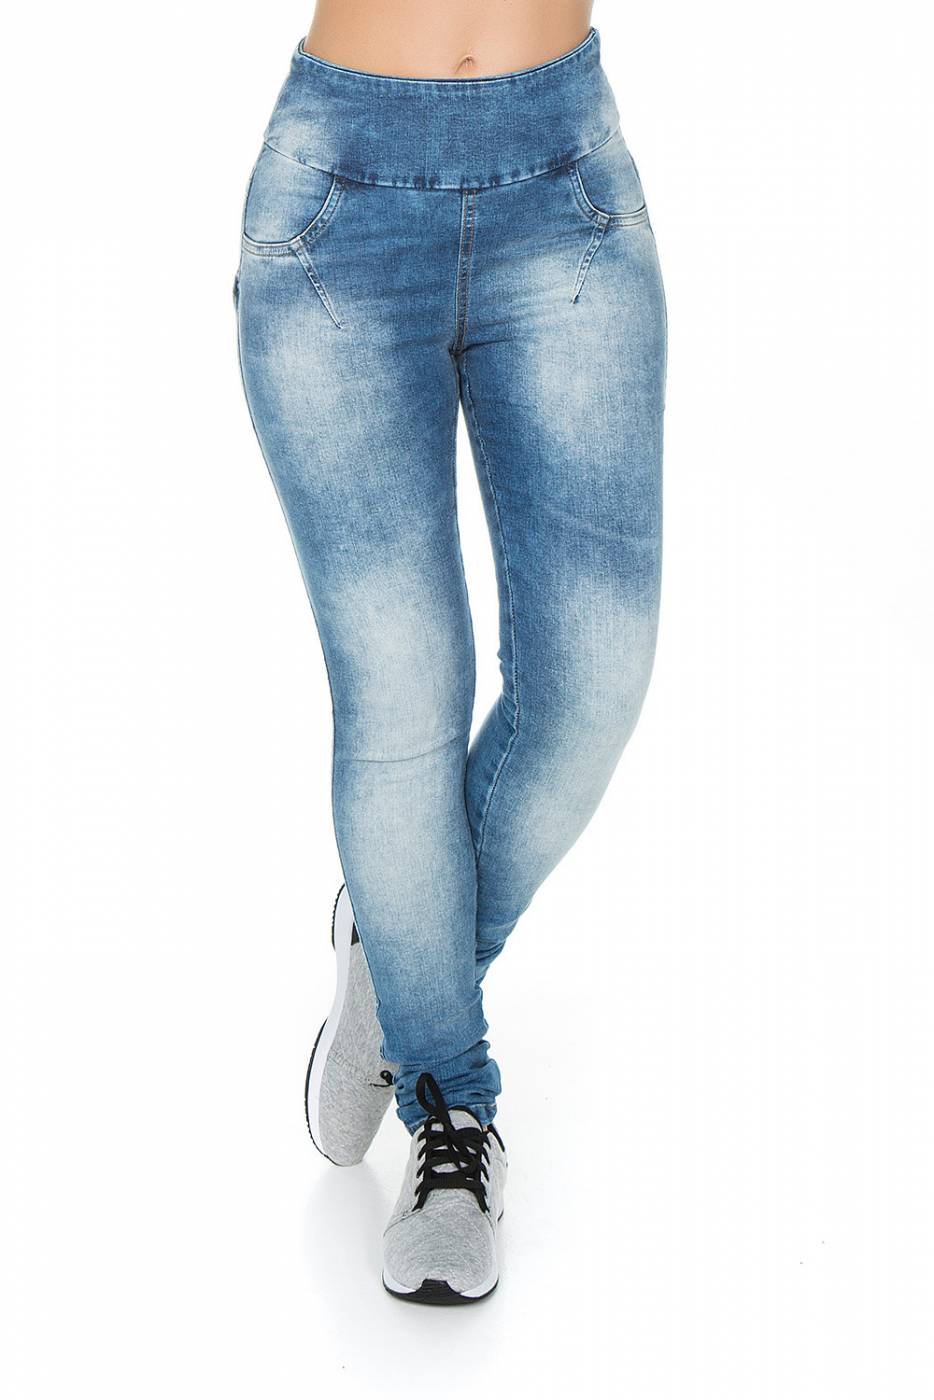 https://cdn.awsli.com.br/2500x2500/1416/1416253/produto/58936336/calca-jeans-pence-jeans-98bf6f7a.jpg